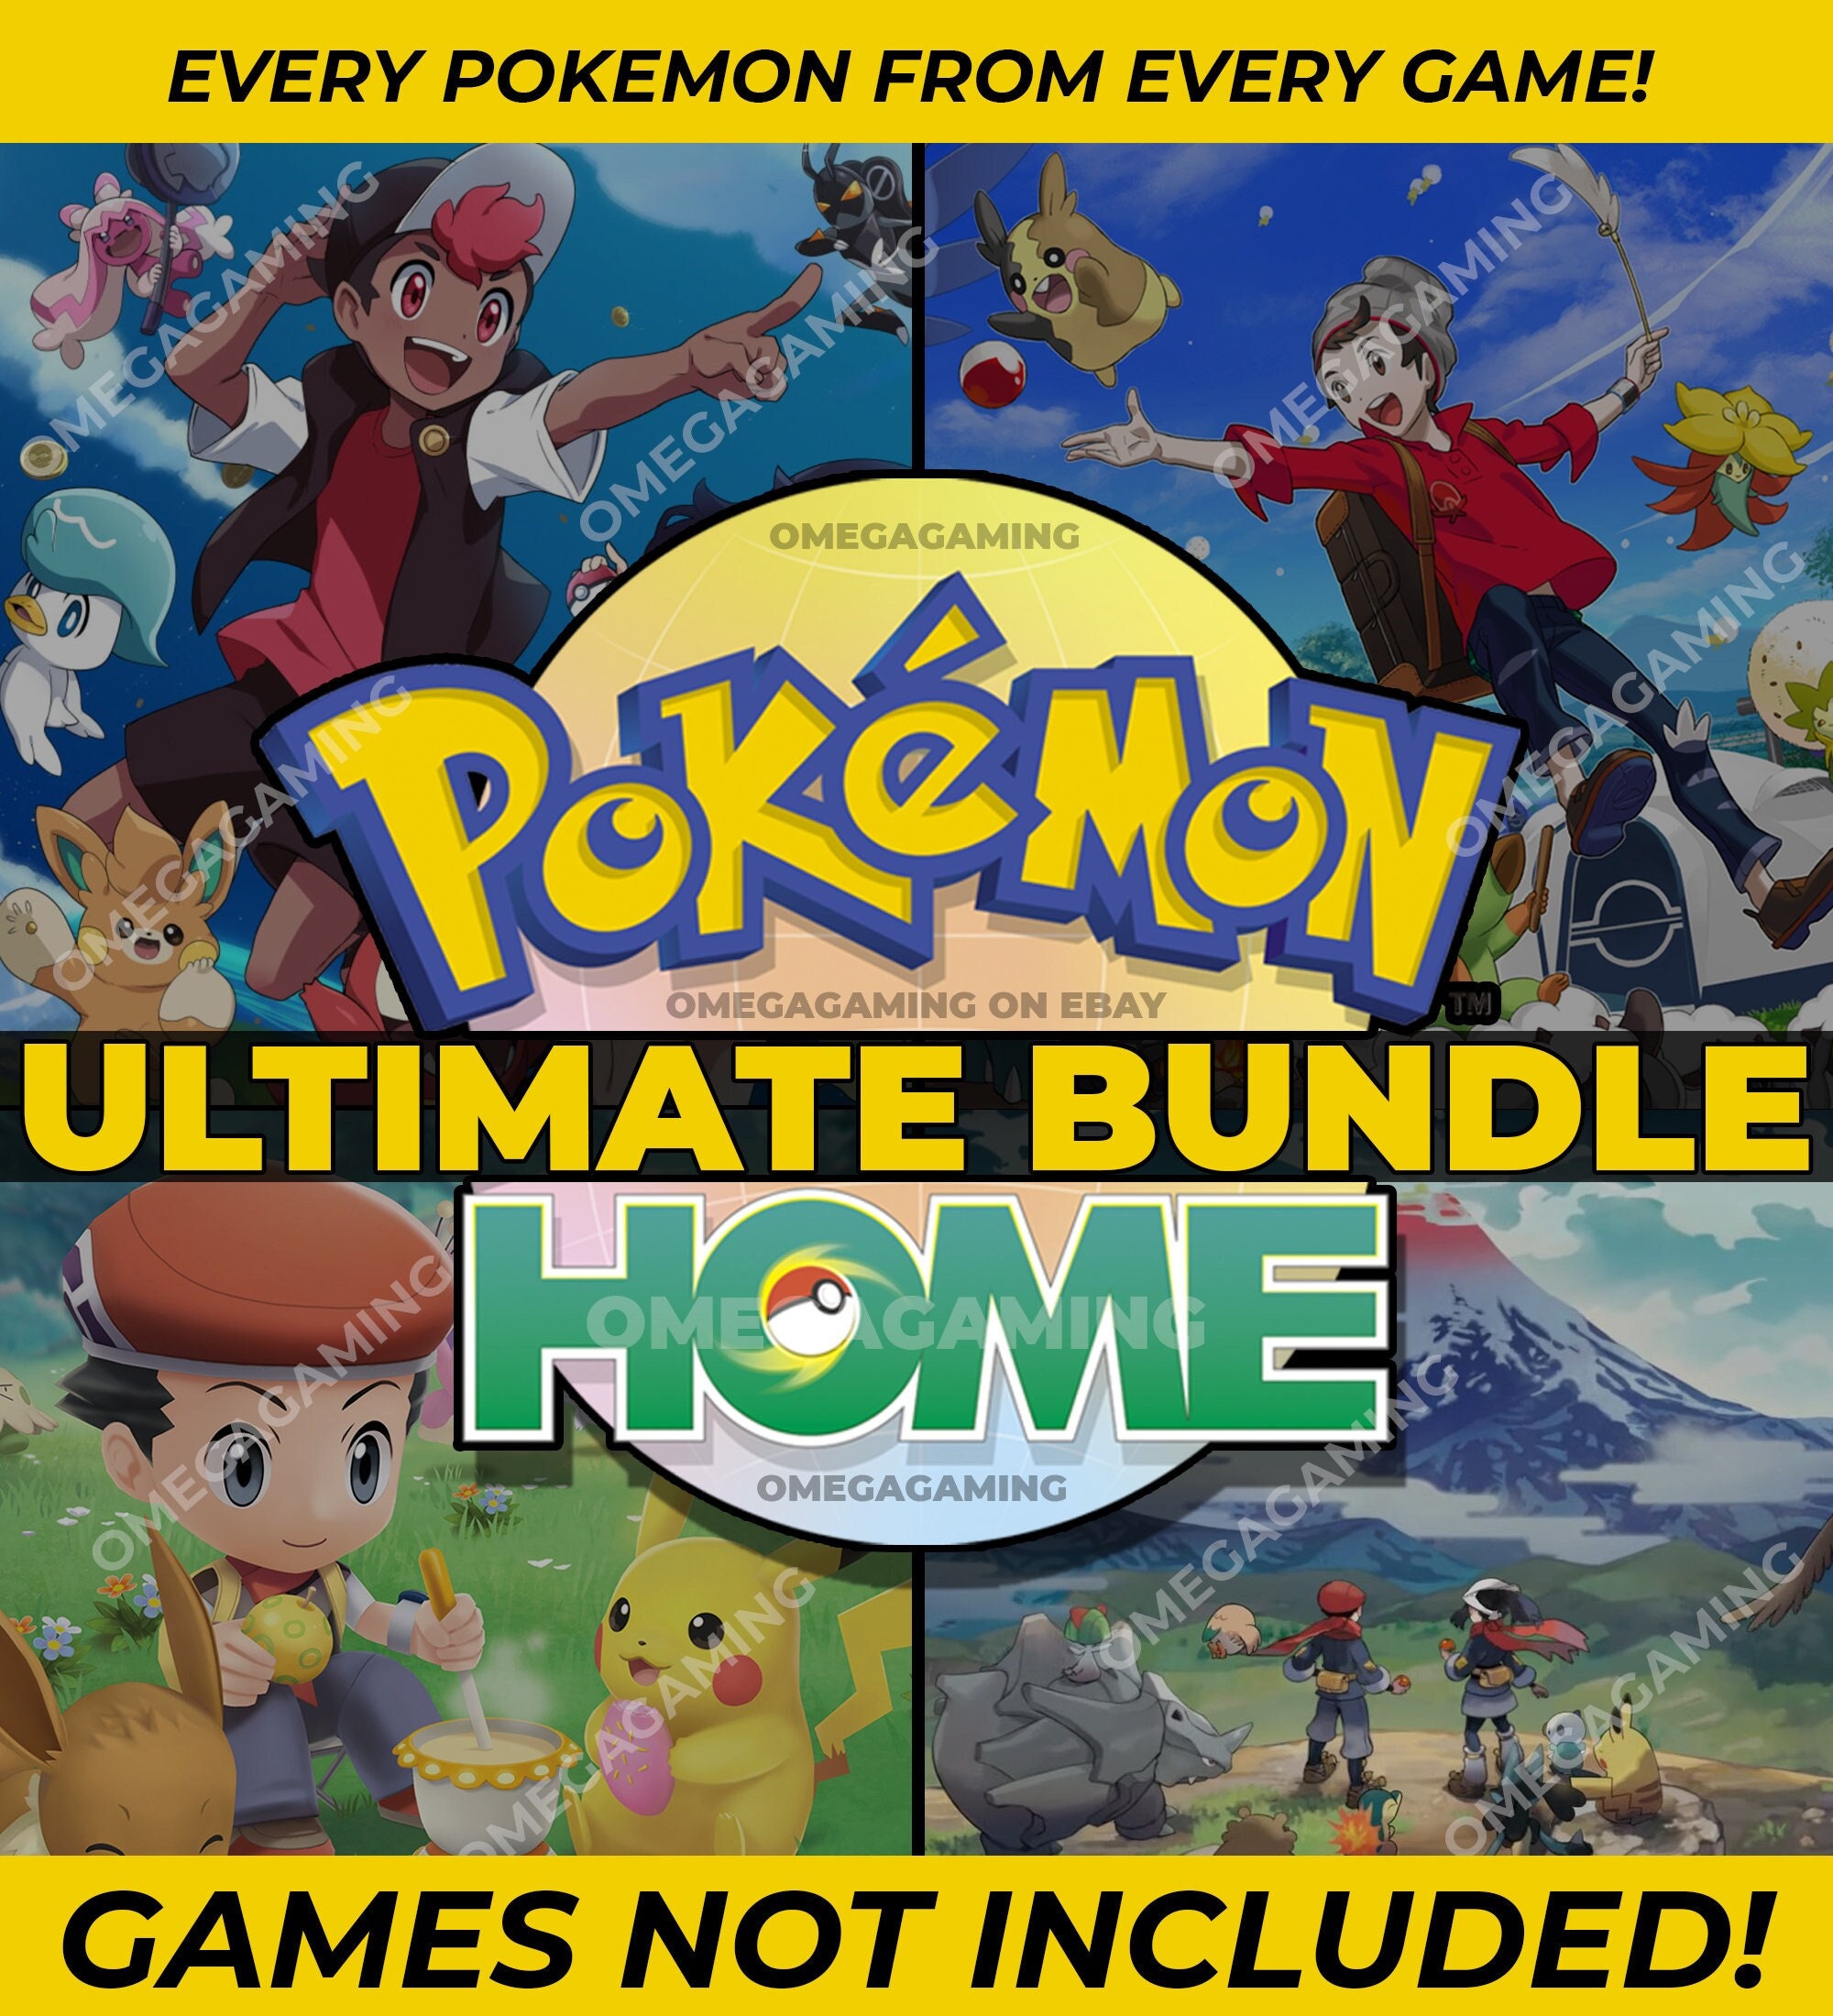 Pokemon Full Pokedex 1-816 Gen 1 To Gen 8 Poster Art Print - A3 Size